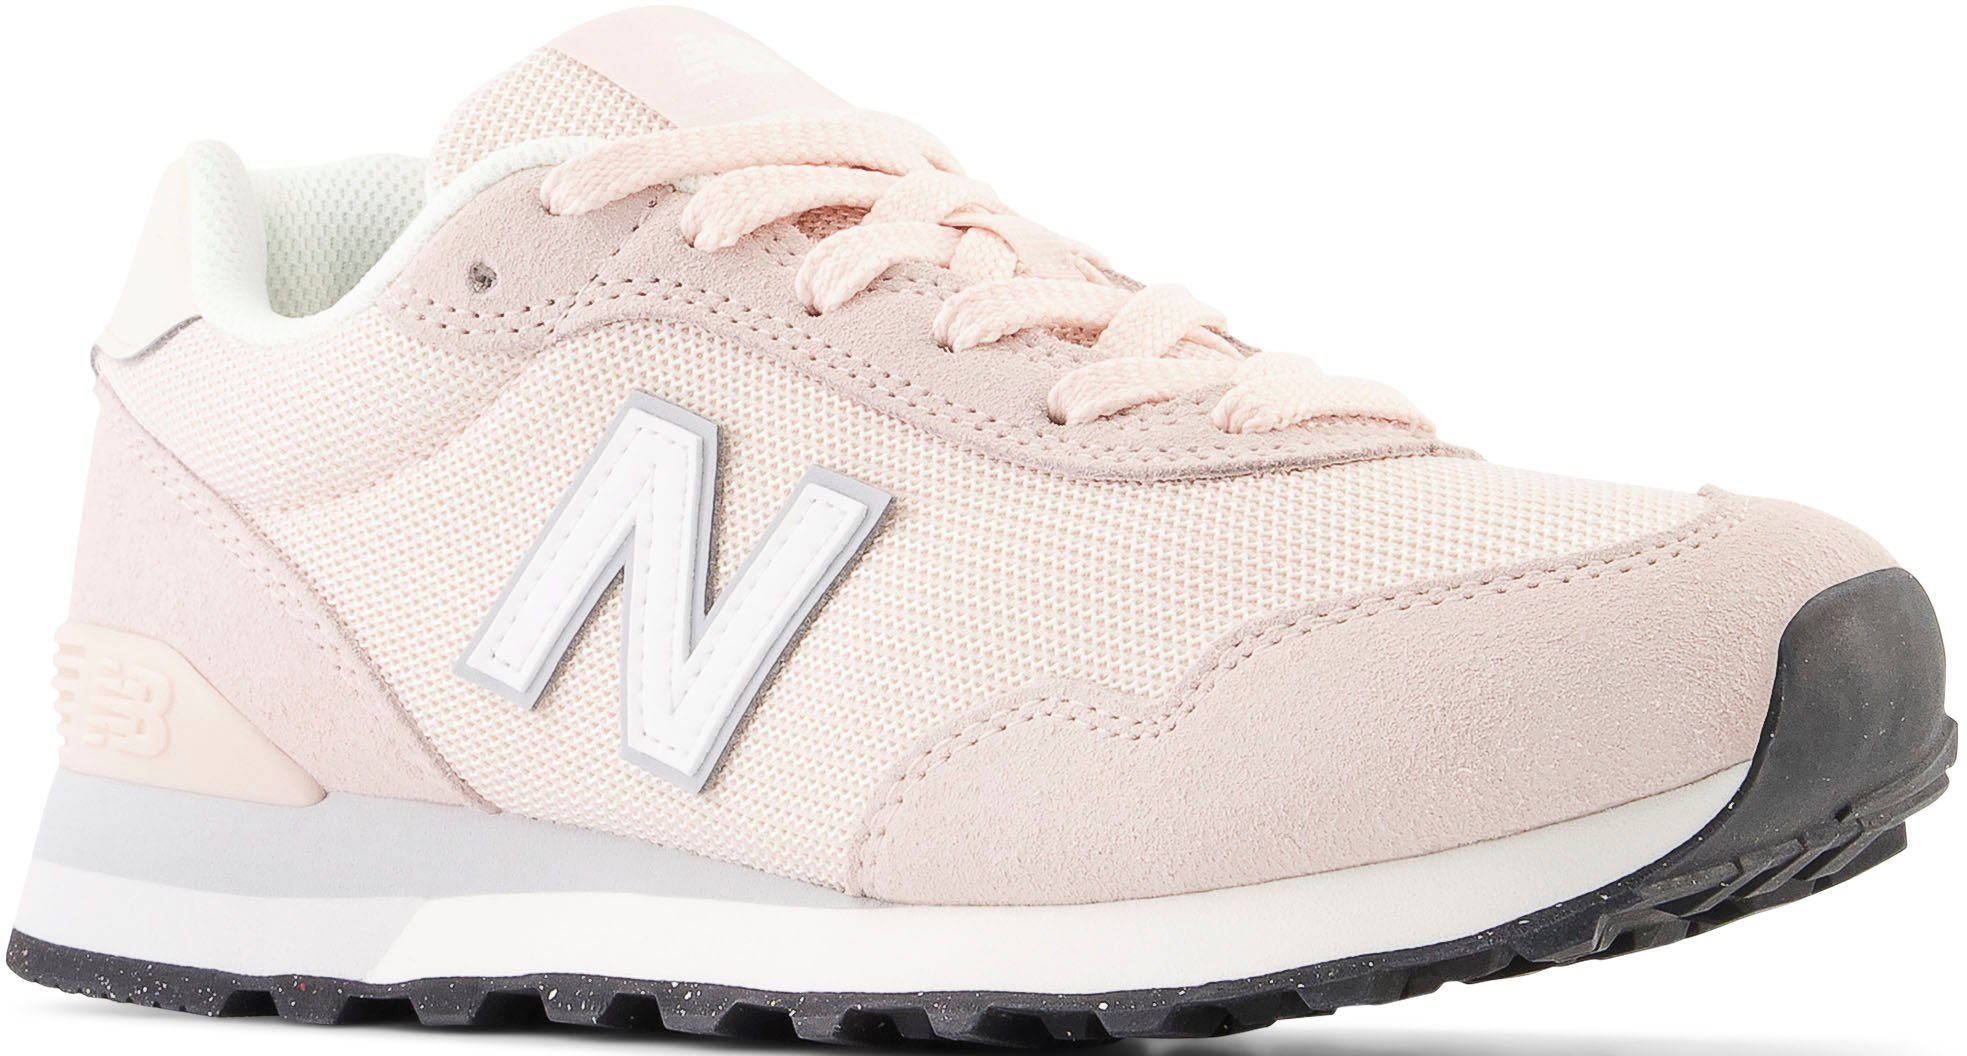 New Balance WL515 rosa-weiß Sneaker